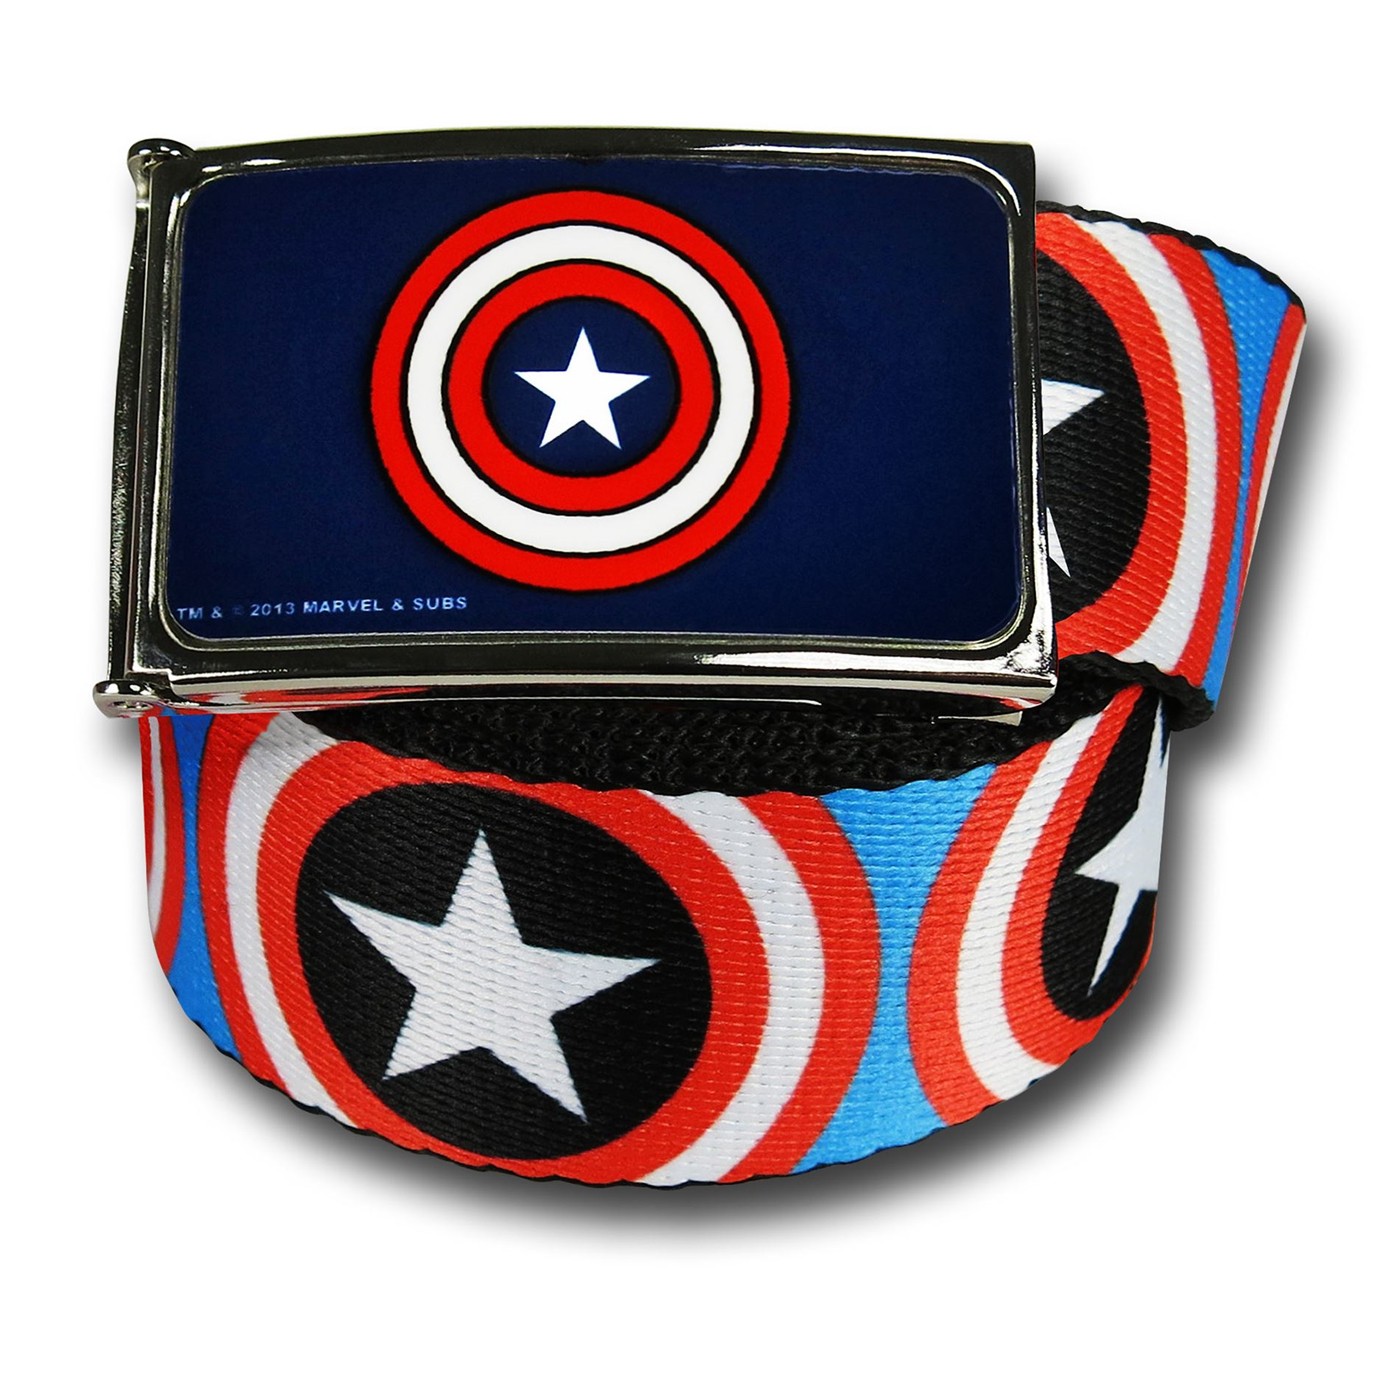 Captain America Shields on Blue Web Belt